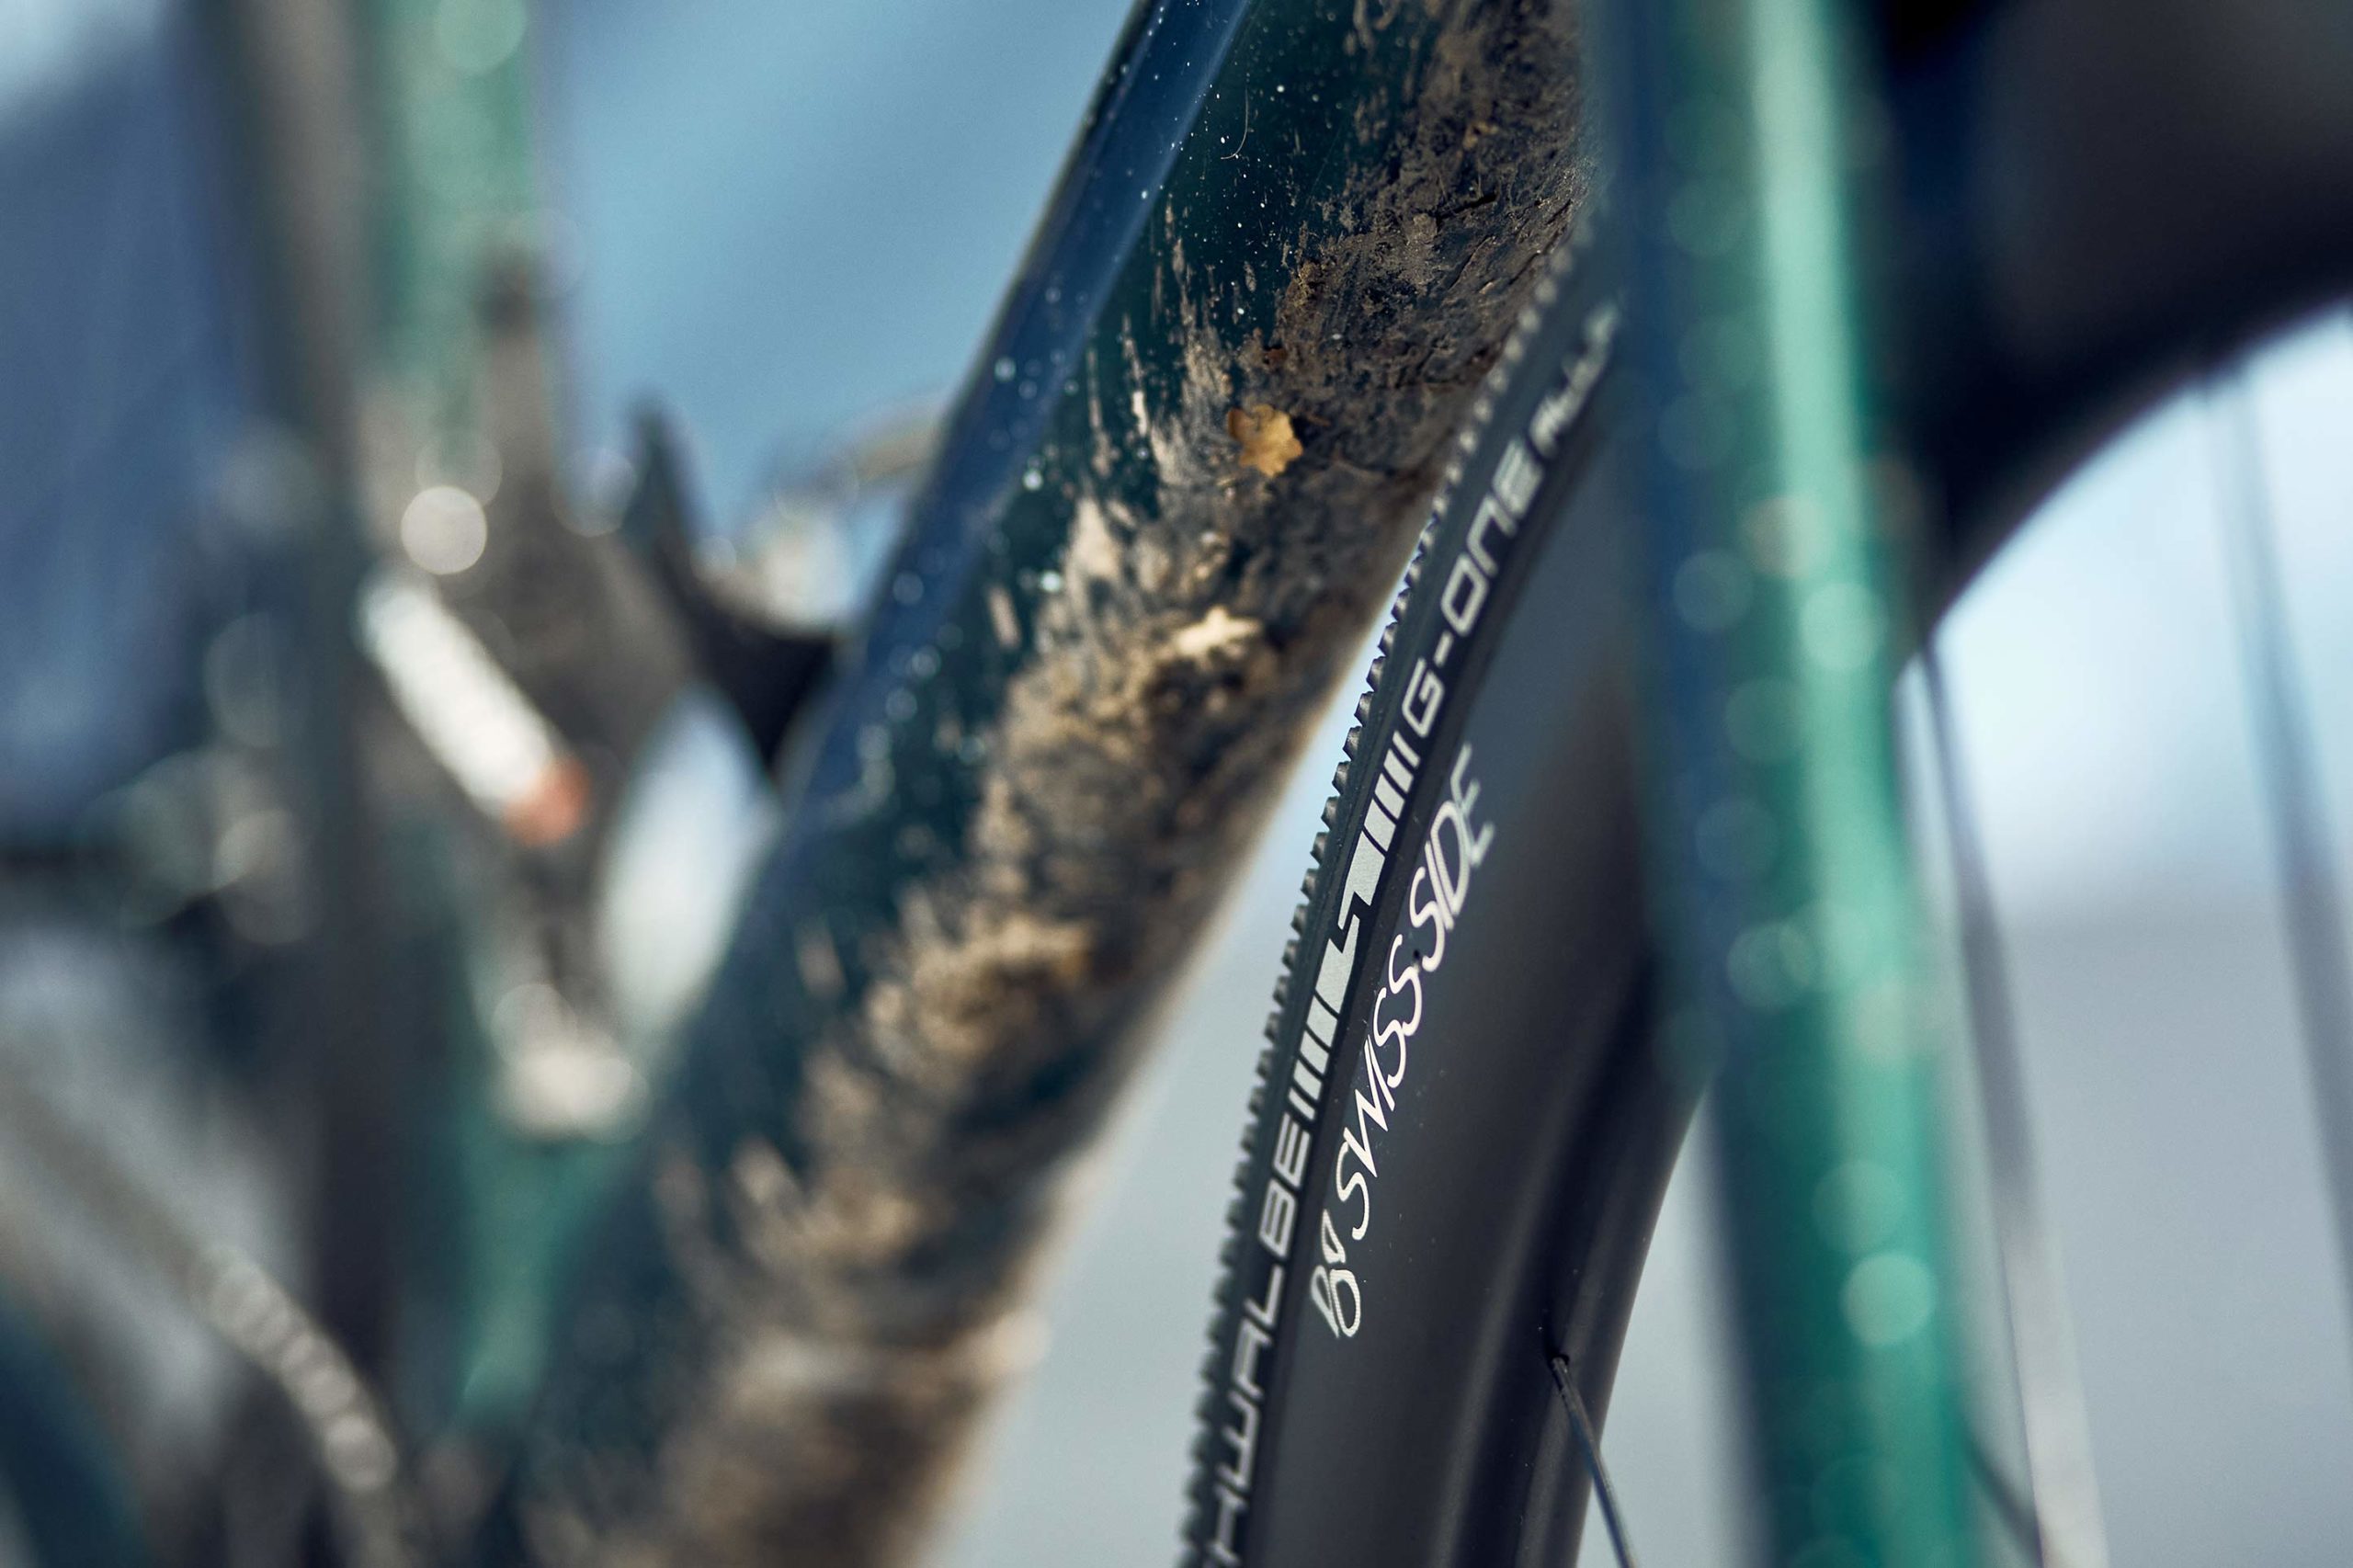 Is a dirty bike actually more aero? No!